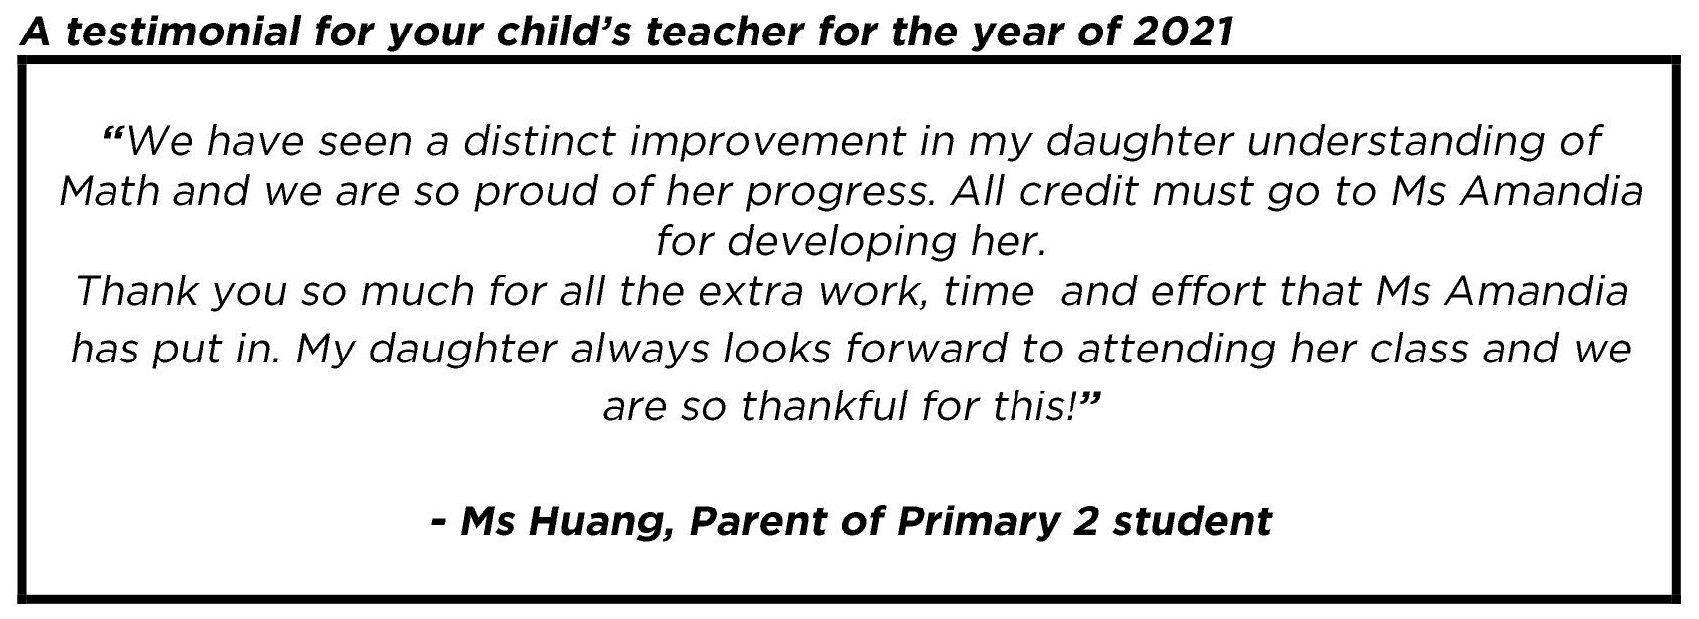 "...distinct improvement in my daughter understanding of Math and we are so proud of her progress."